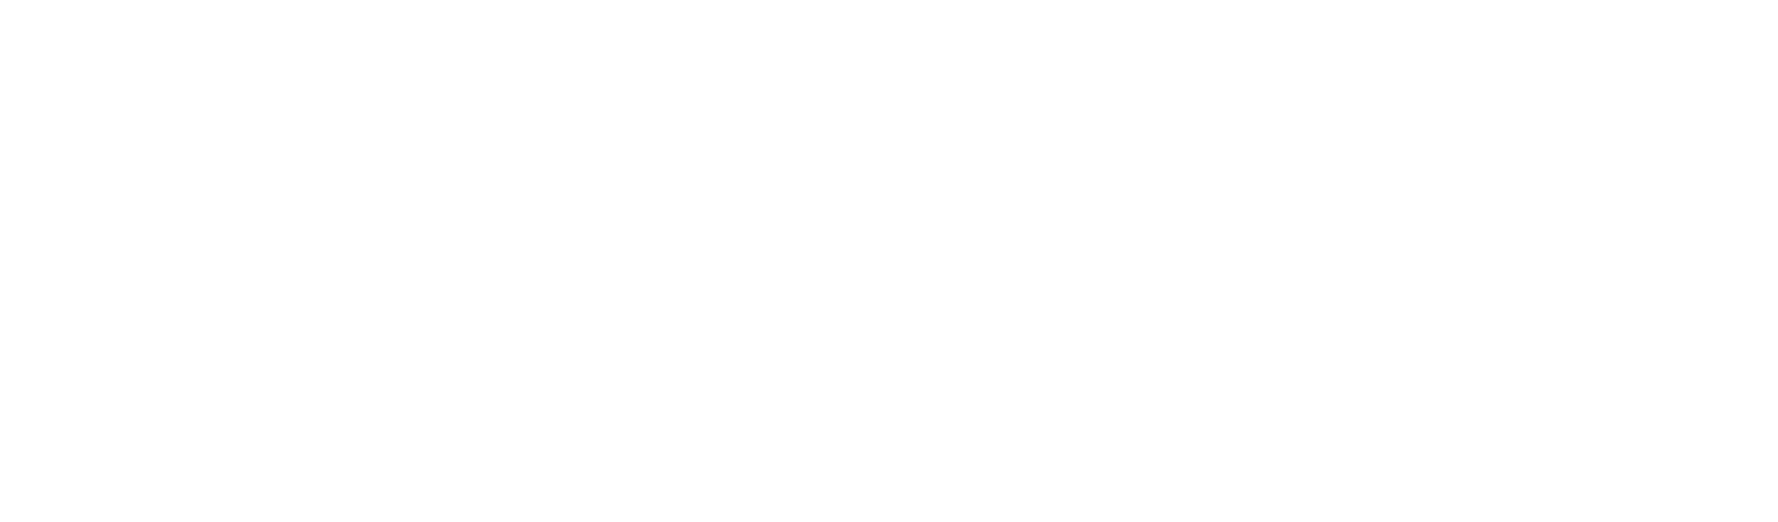 freshbooks-logo-white-1